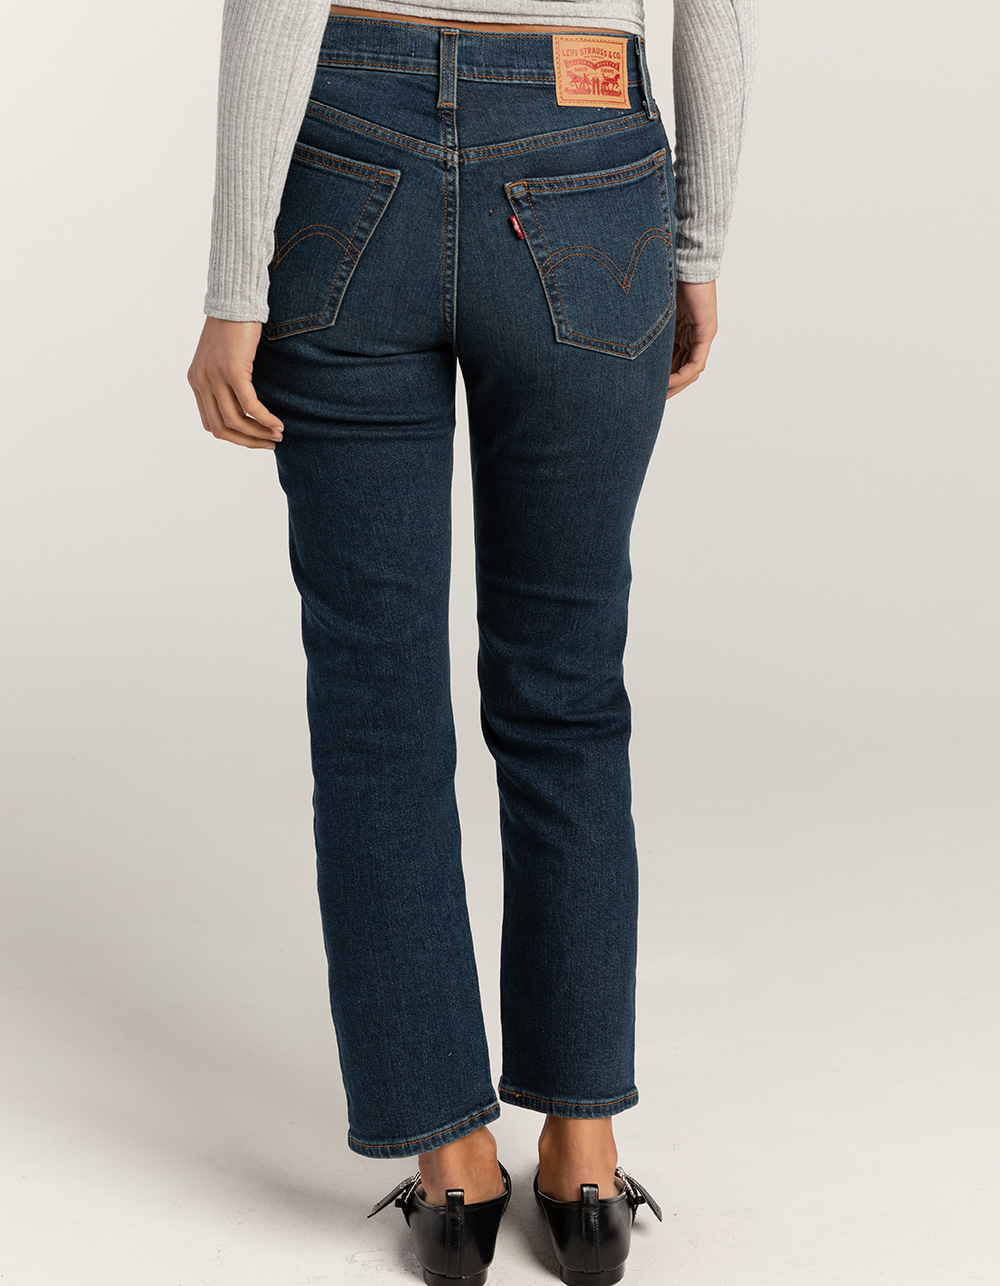 LEVI'S Wedgie Straight Womens Jeans - Indigo Here We Go - DARK STONE ...